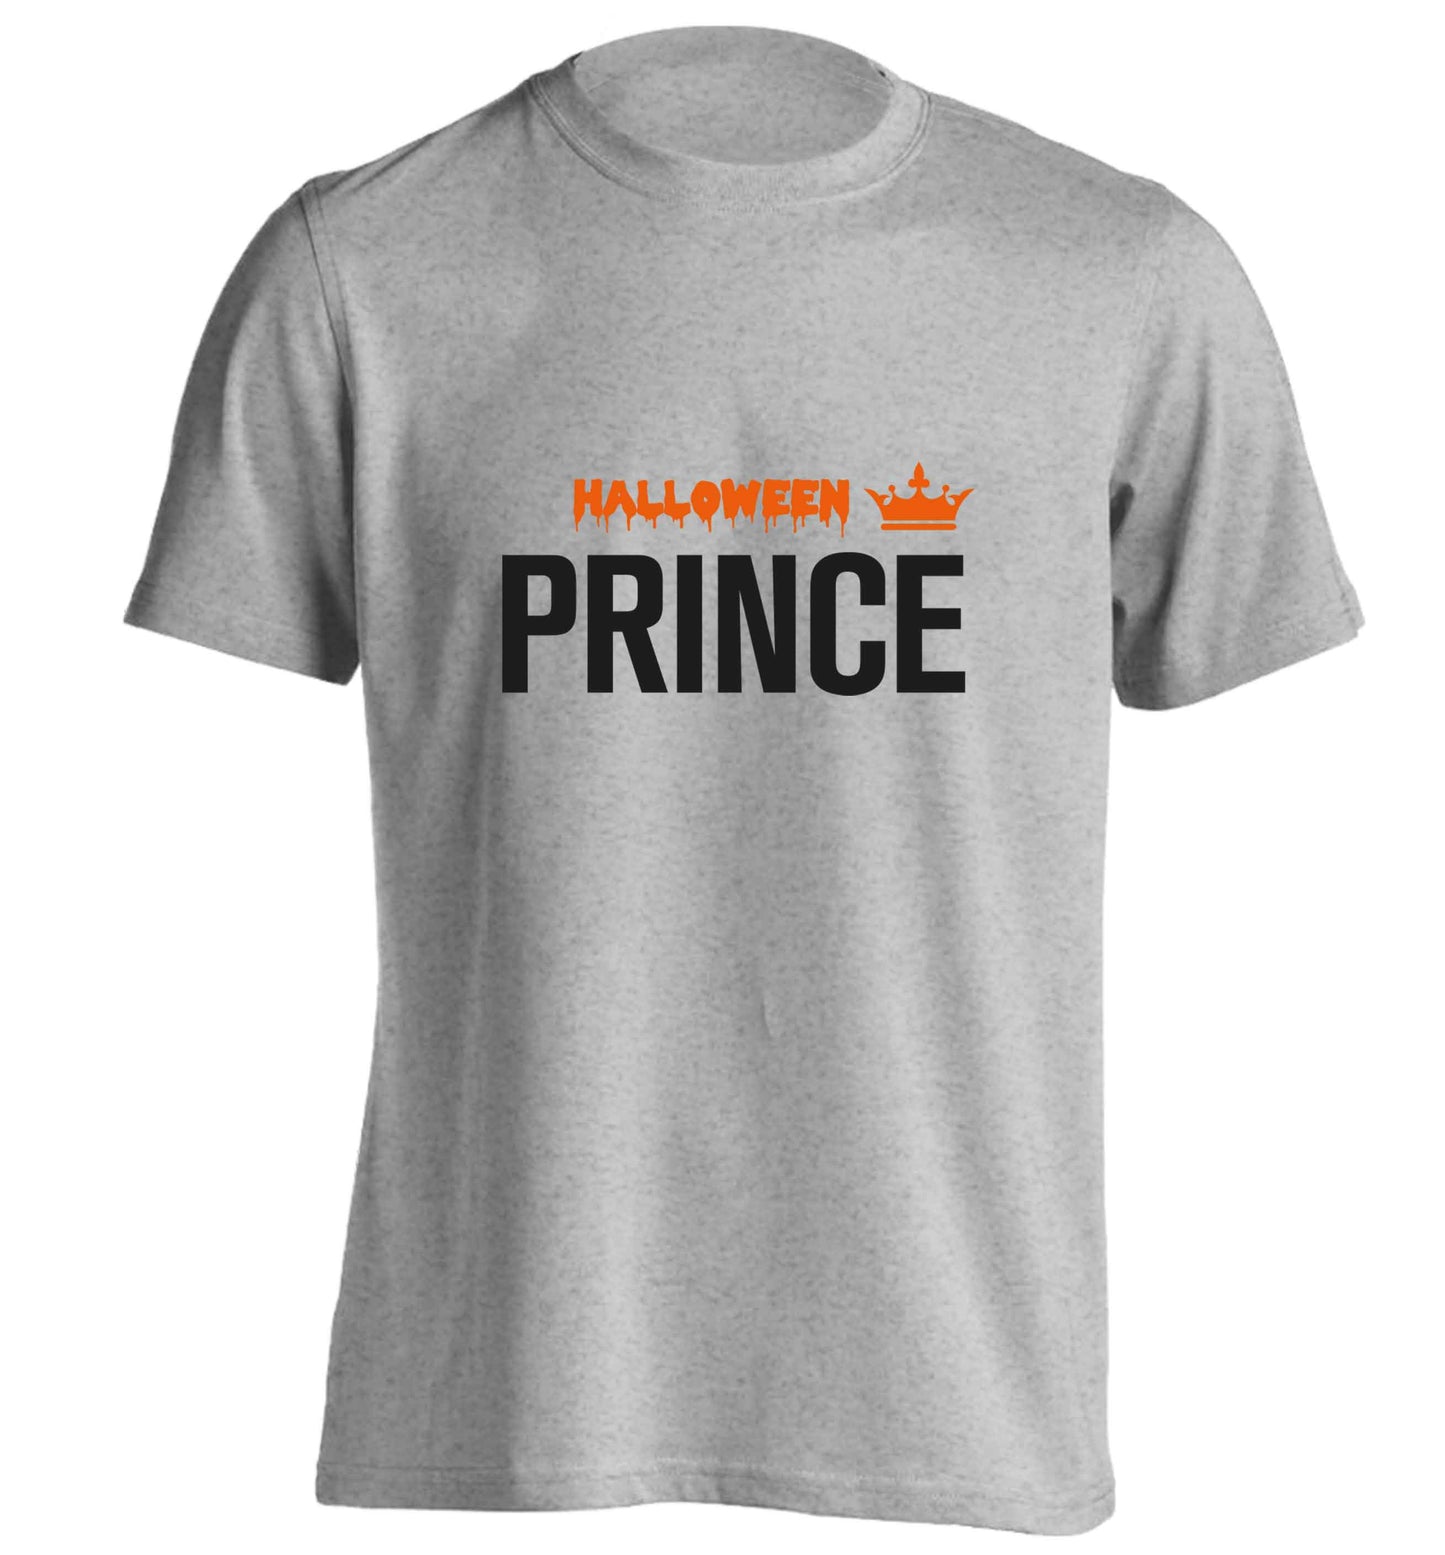 Halloween prince adults unisex grey Tshirt 2XL